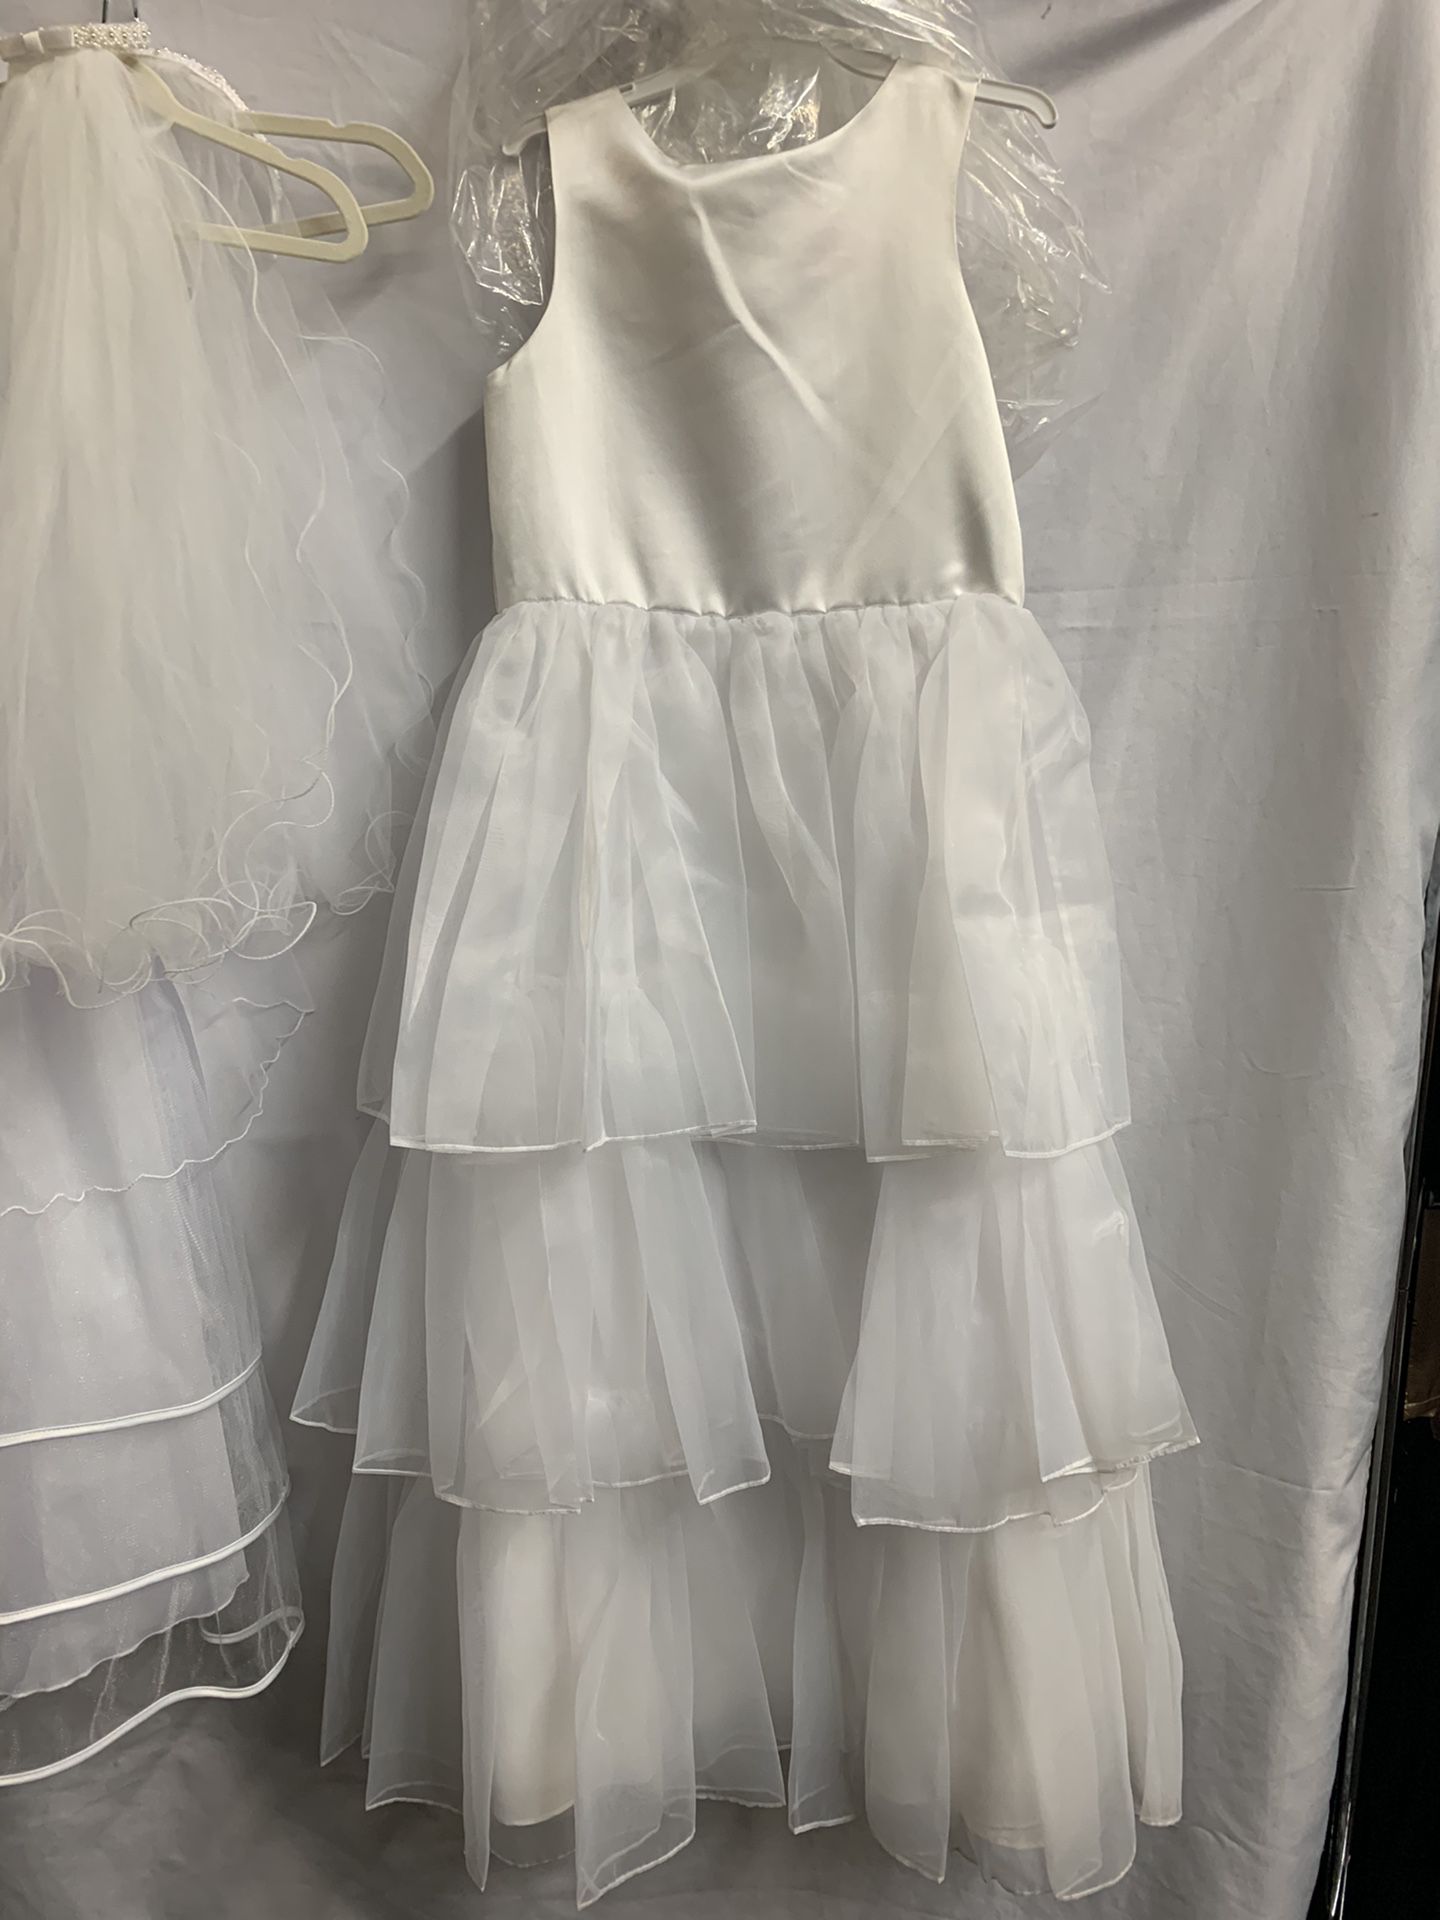 Brand New Size 14 White Dress 3 Tier Flower Girl or Baptism or 1 communion Dress